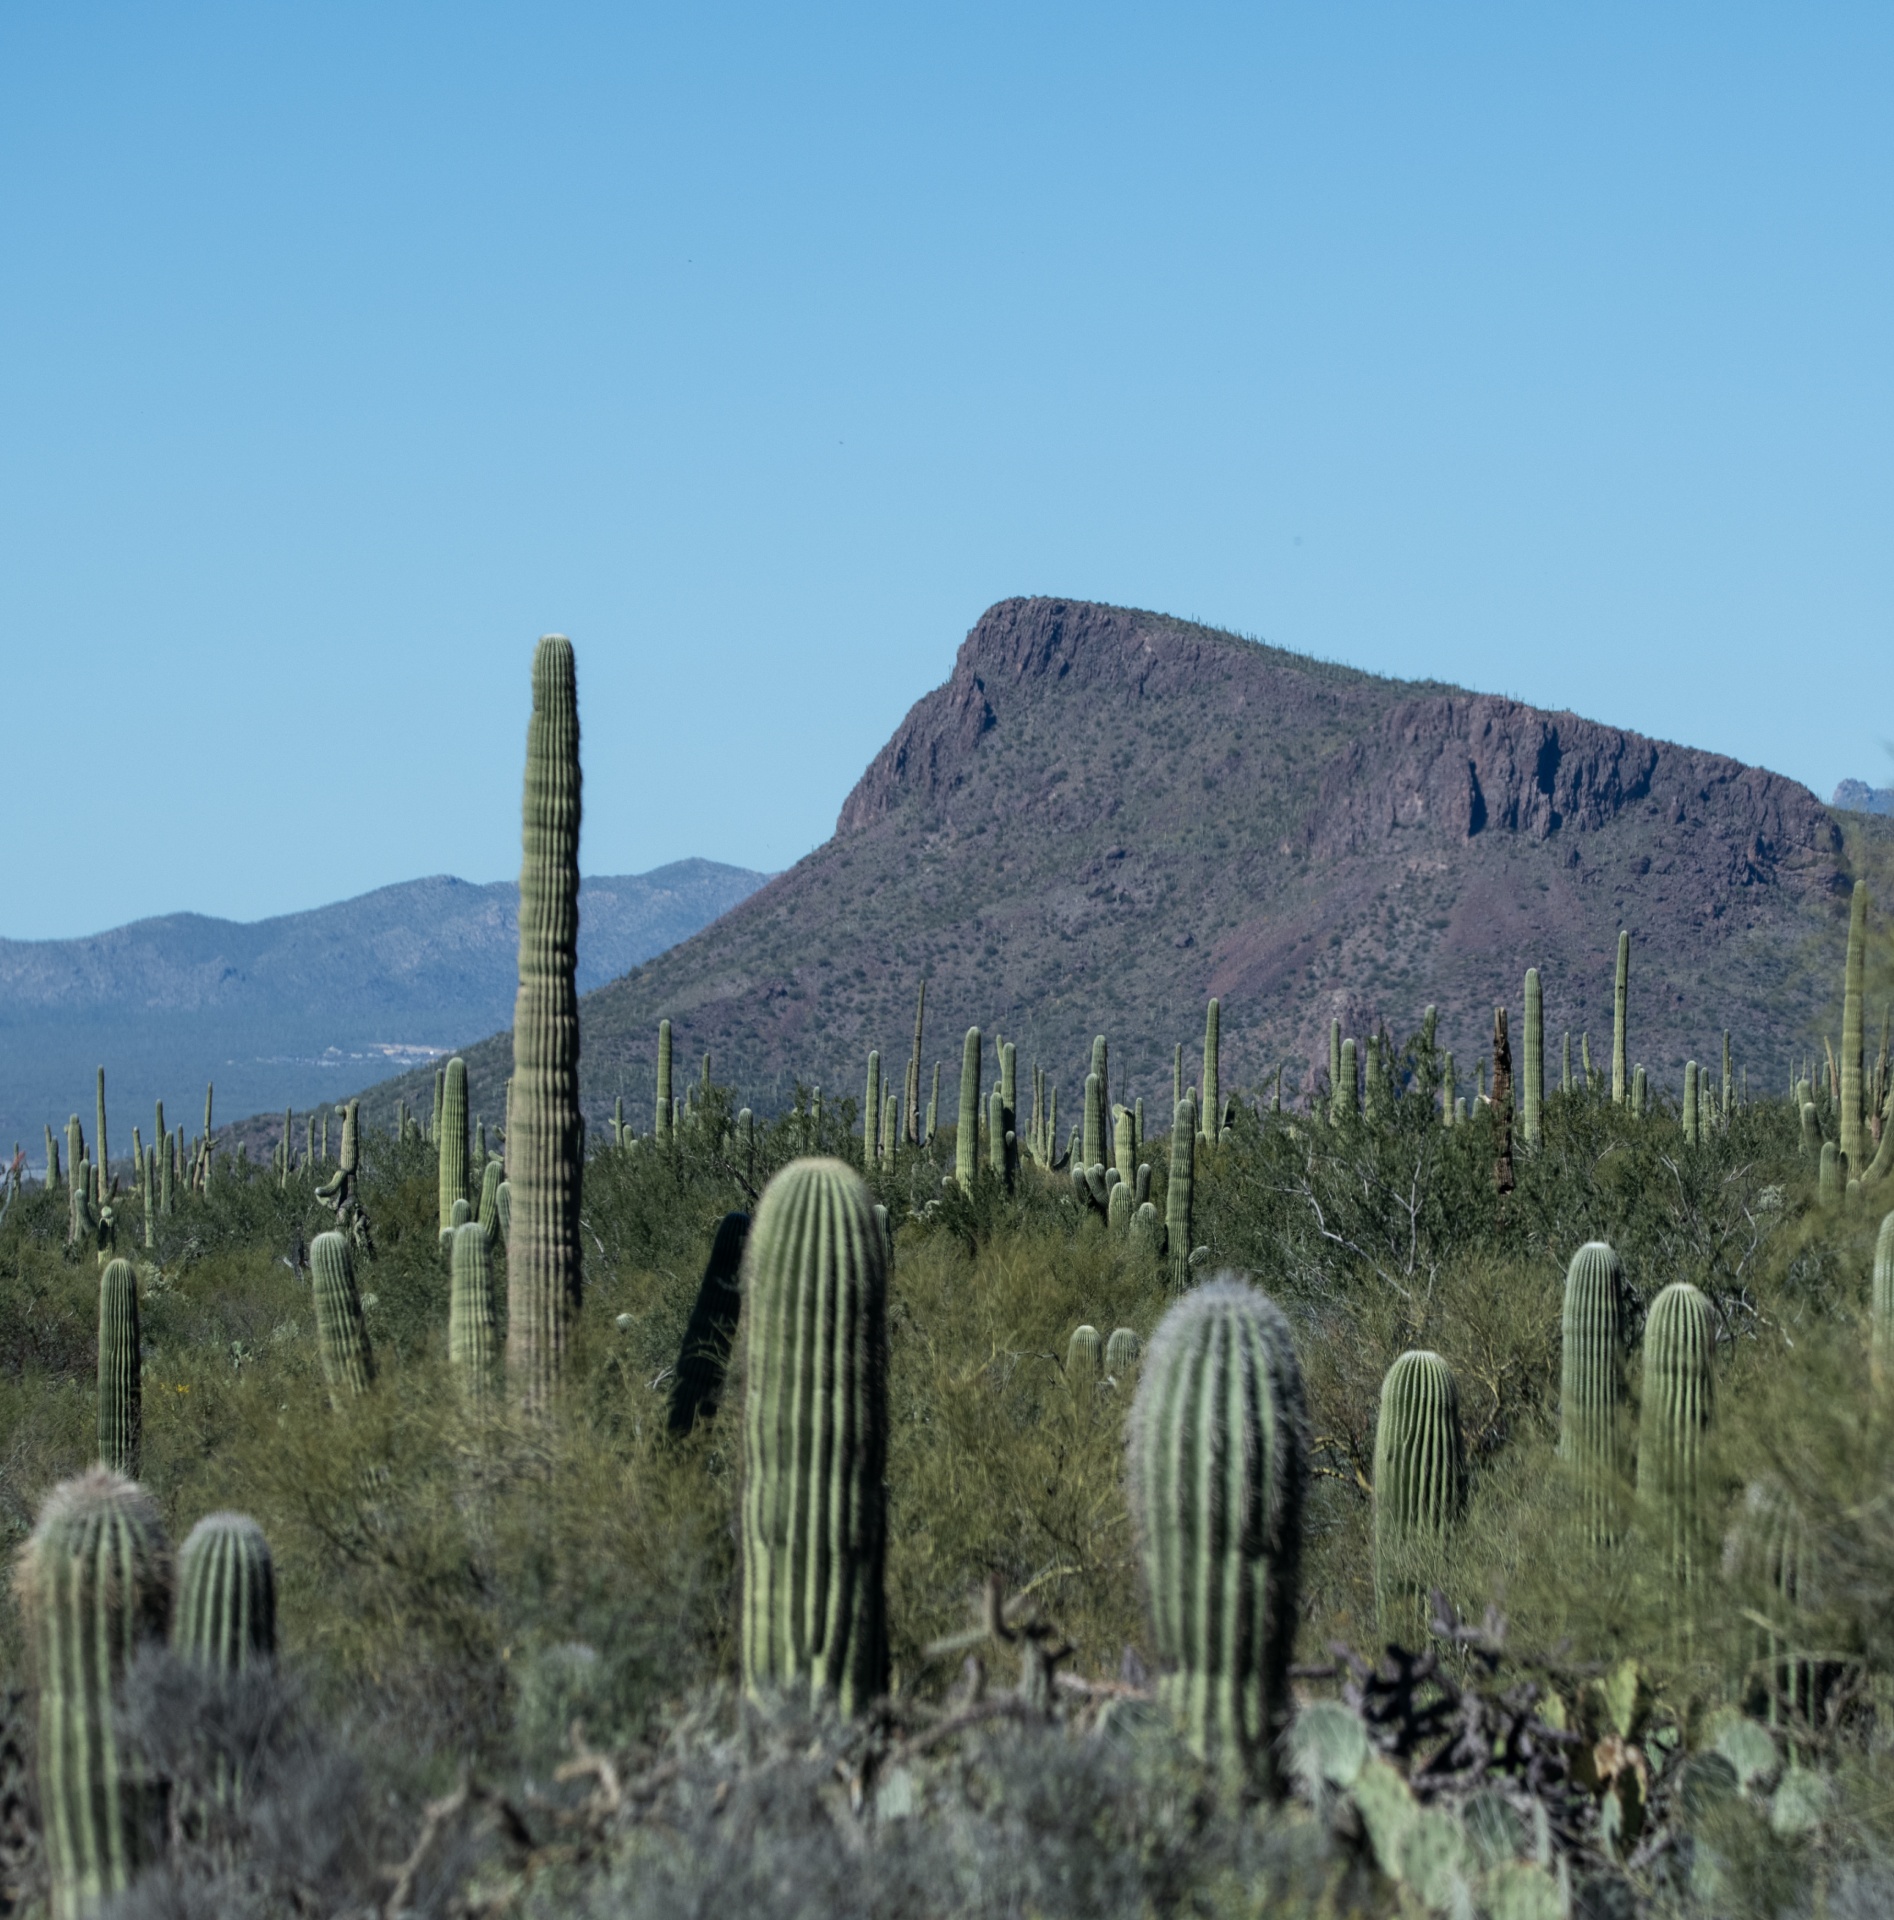 Arizona Saguaro Cacti Photograph Free Stock Photo - Public Domain Pictures